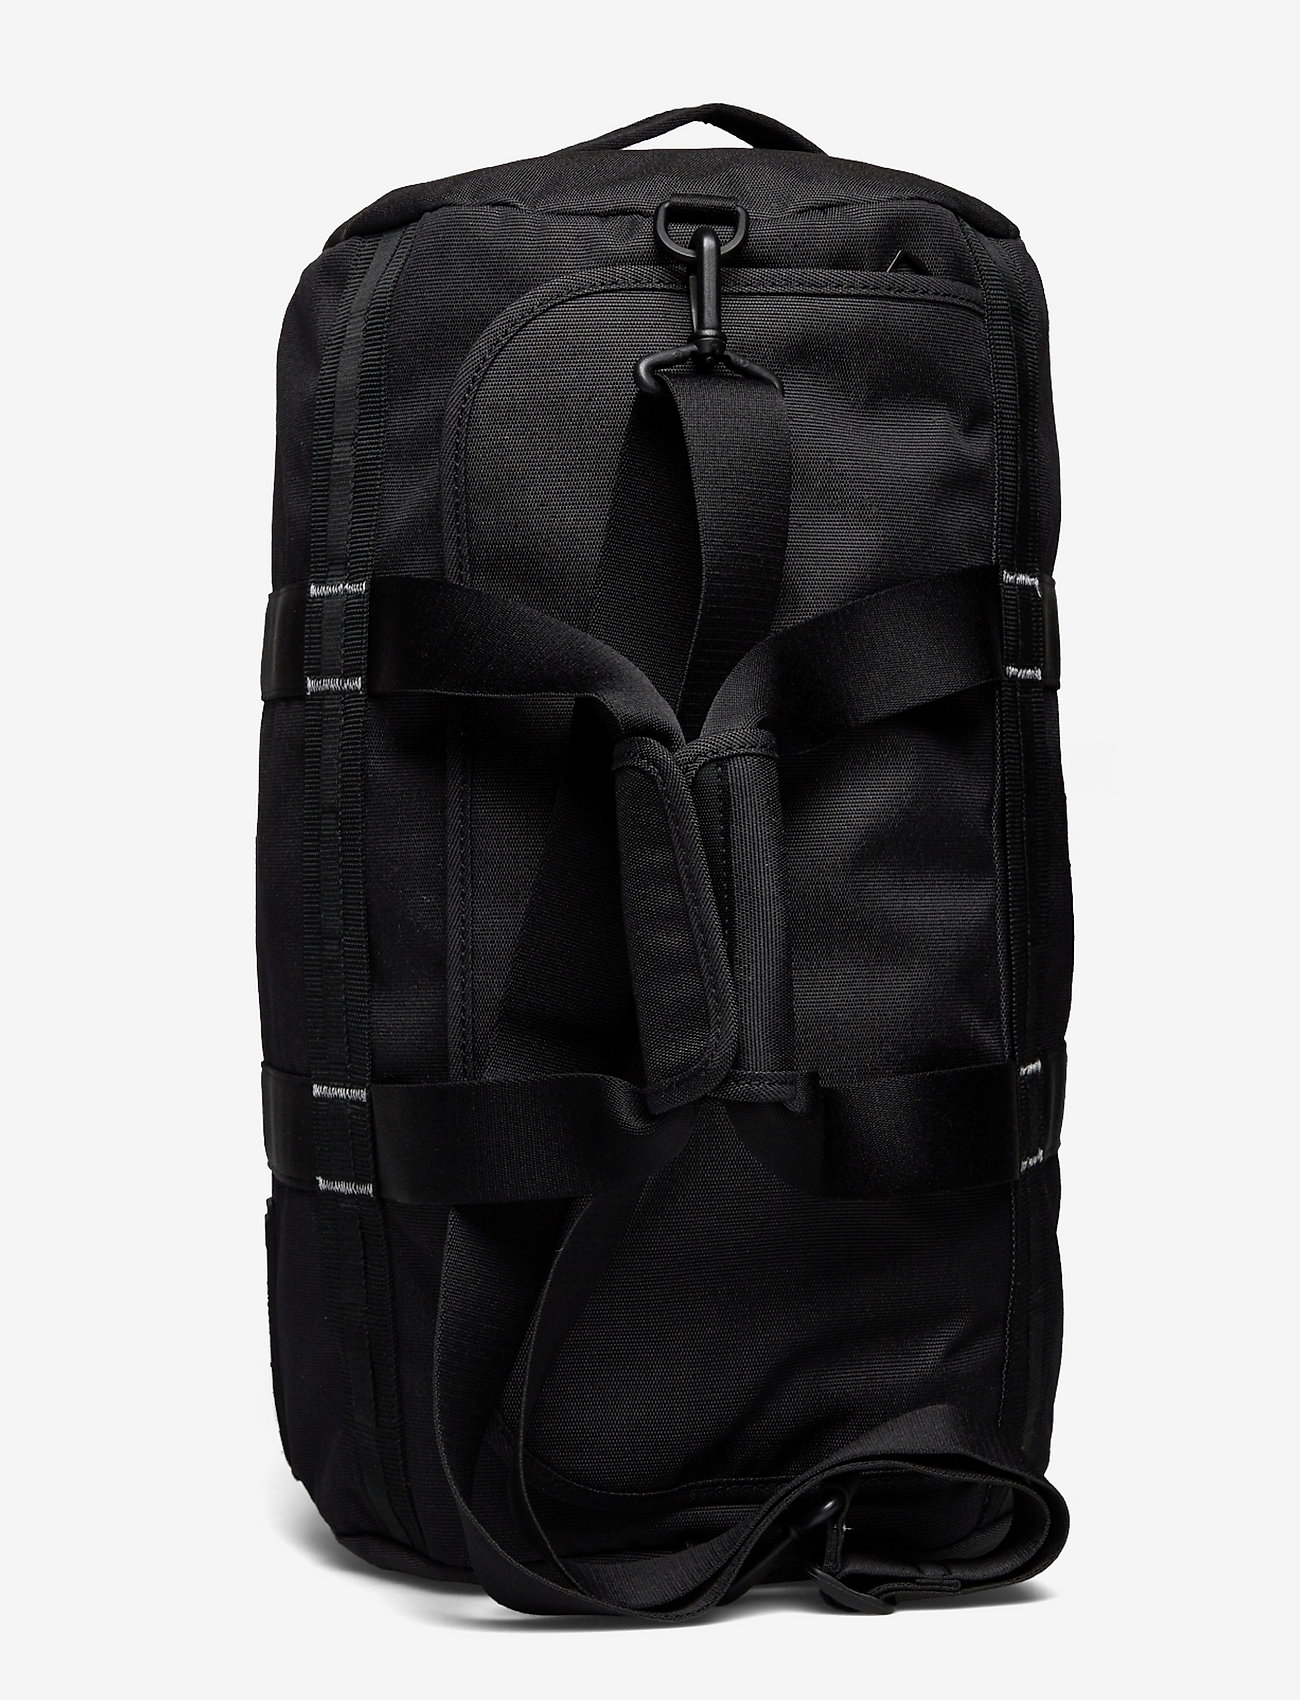 Calvin Klein - INDUSTRIAL NYLON CONV BACKP/DUFF - weekend bags - black - 1